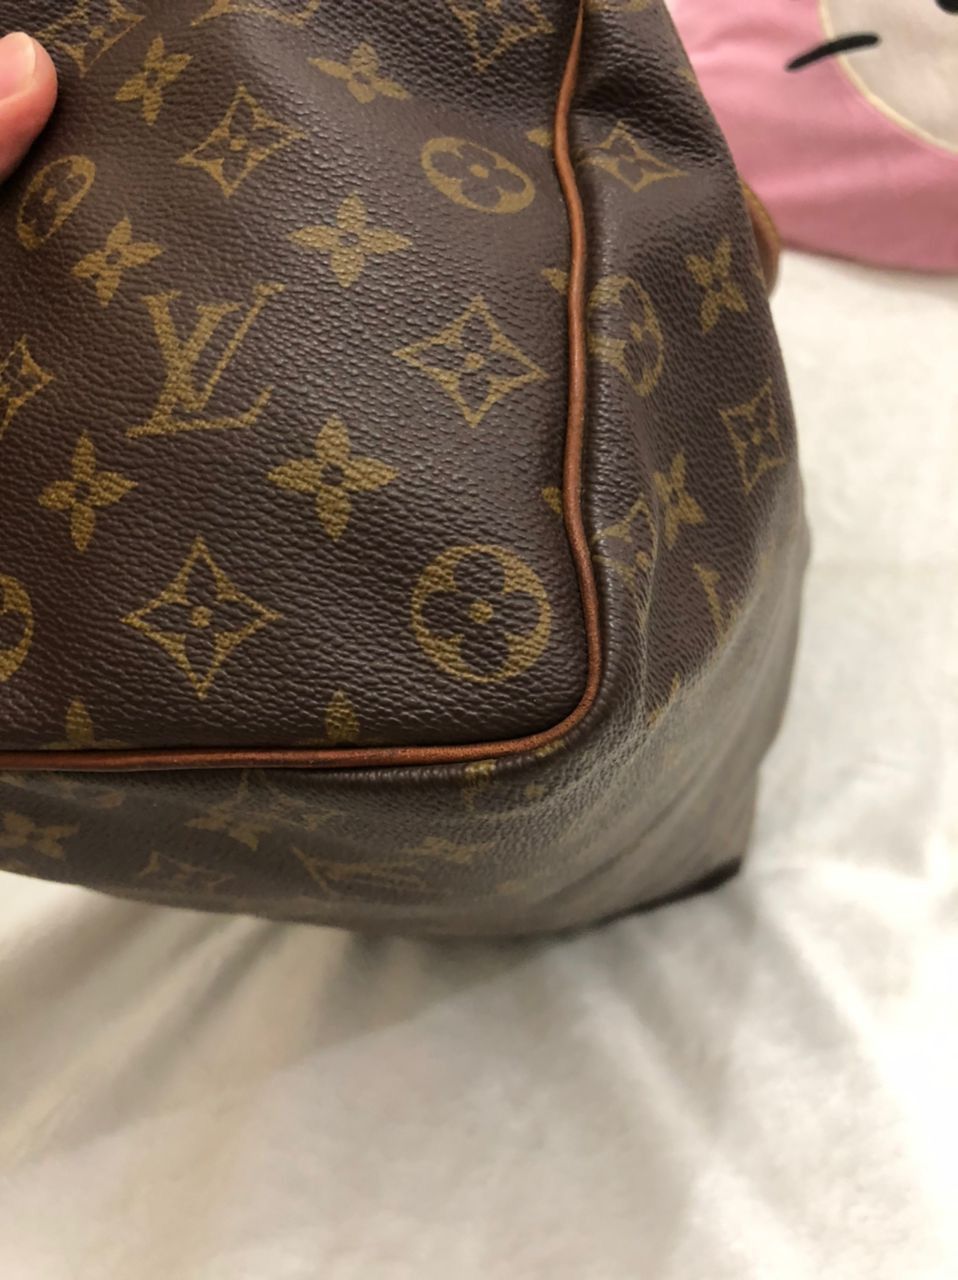 Authentic Vintage Louis Vuitton Monogram Speedy 40 Handbag - 15